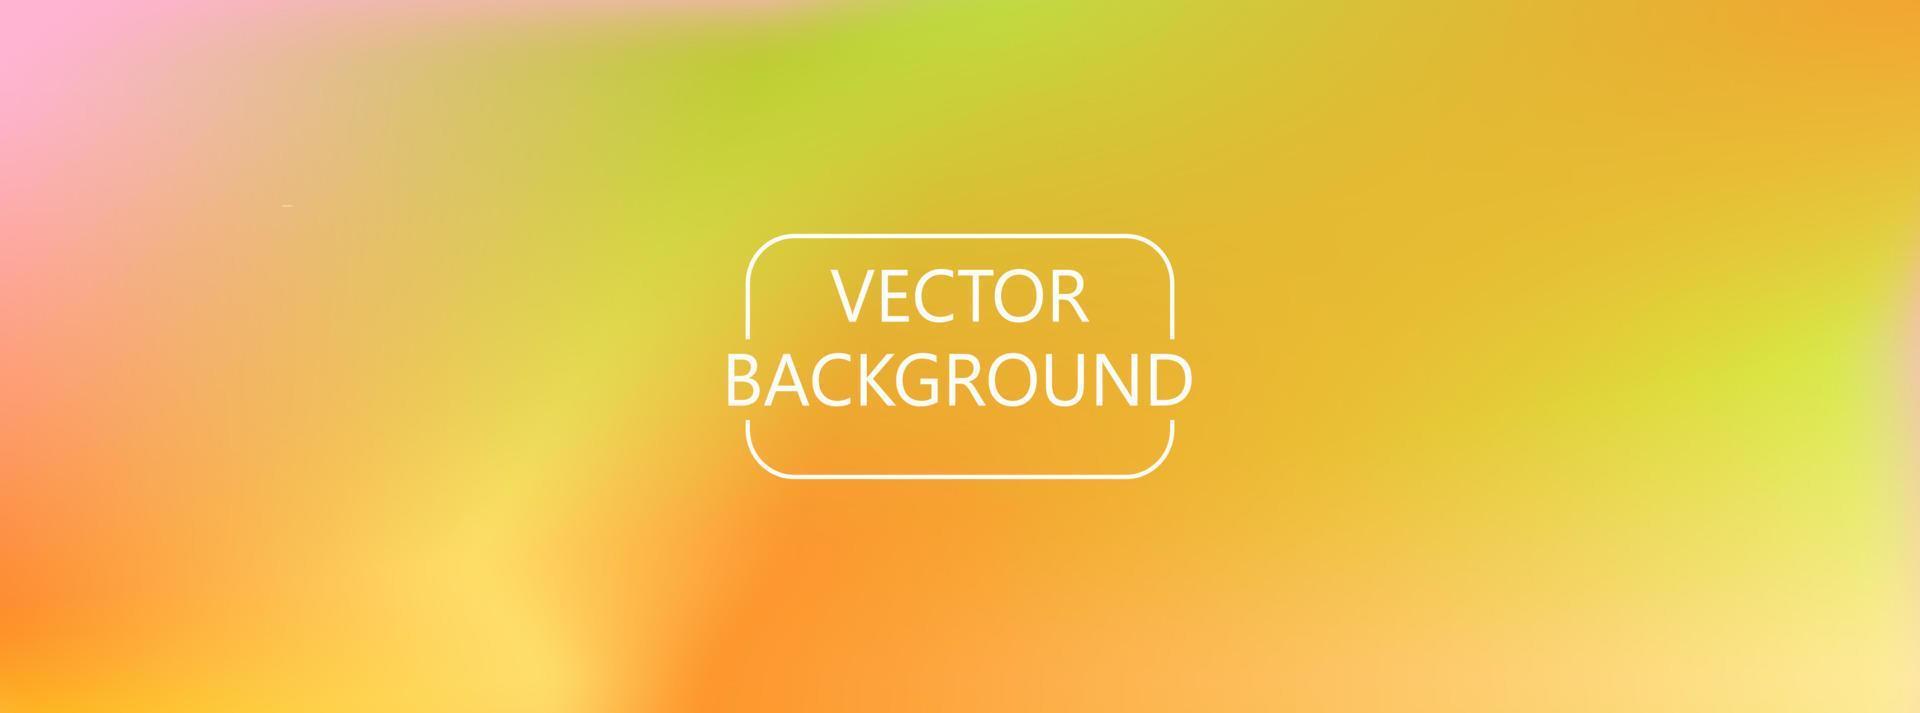 Abstract orange blurred gradient background vector illustration